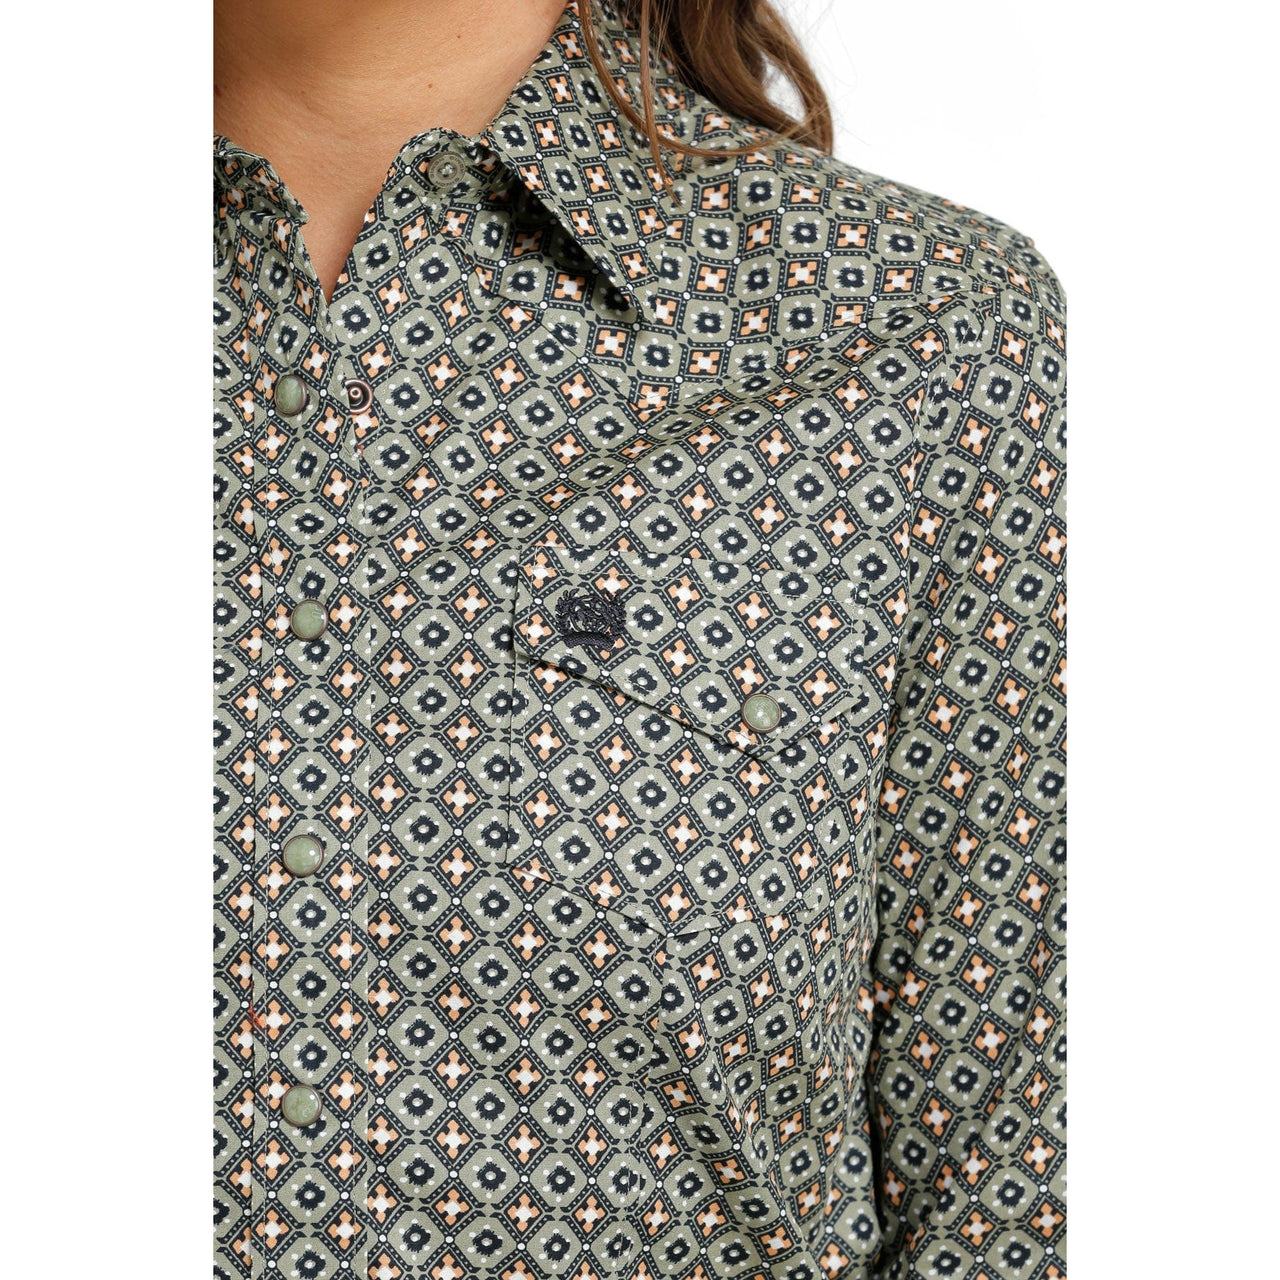 Cinch Women's Long Sleeve Printed Snap Western Shirt - Olive